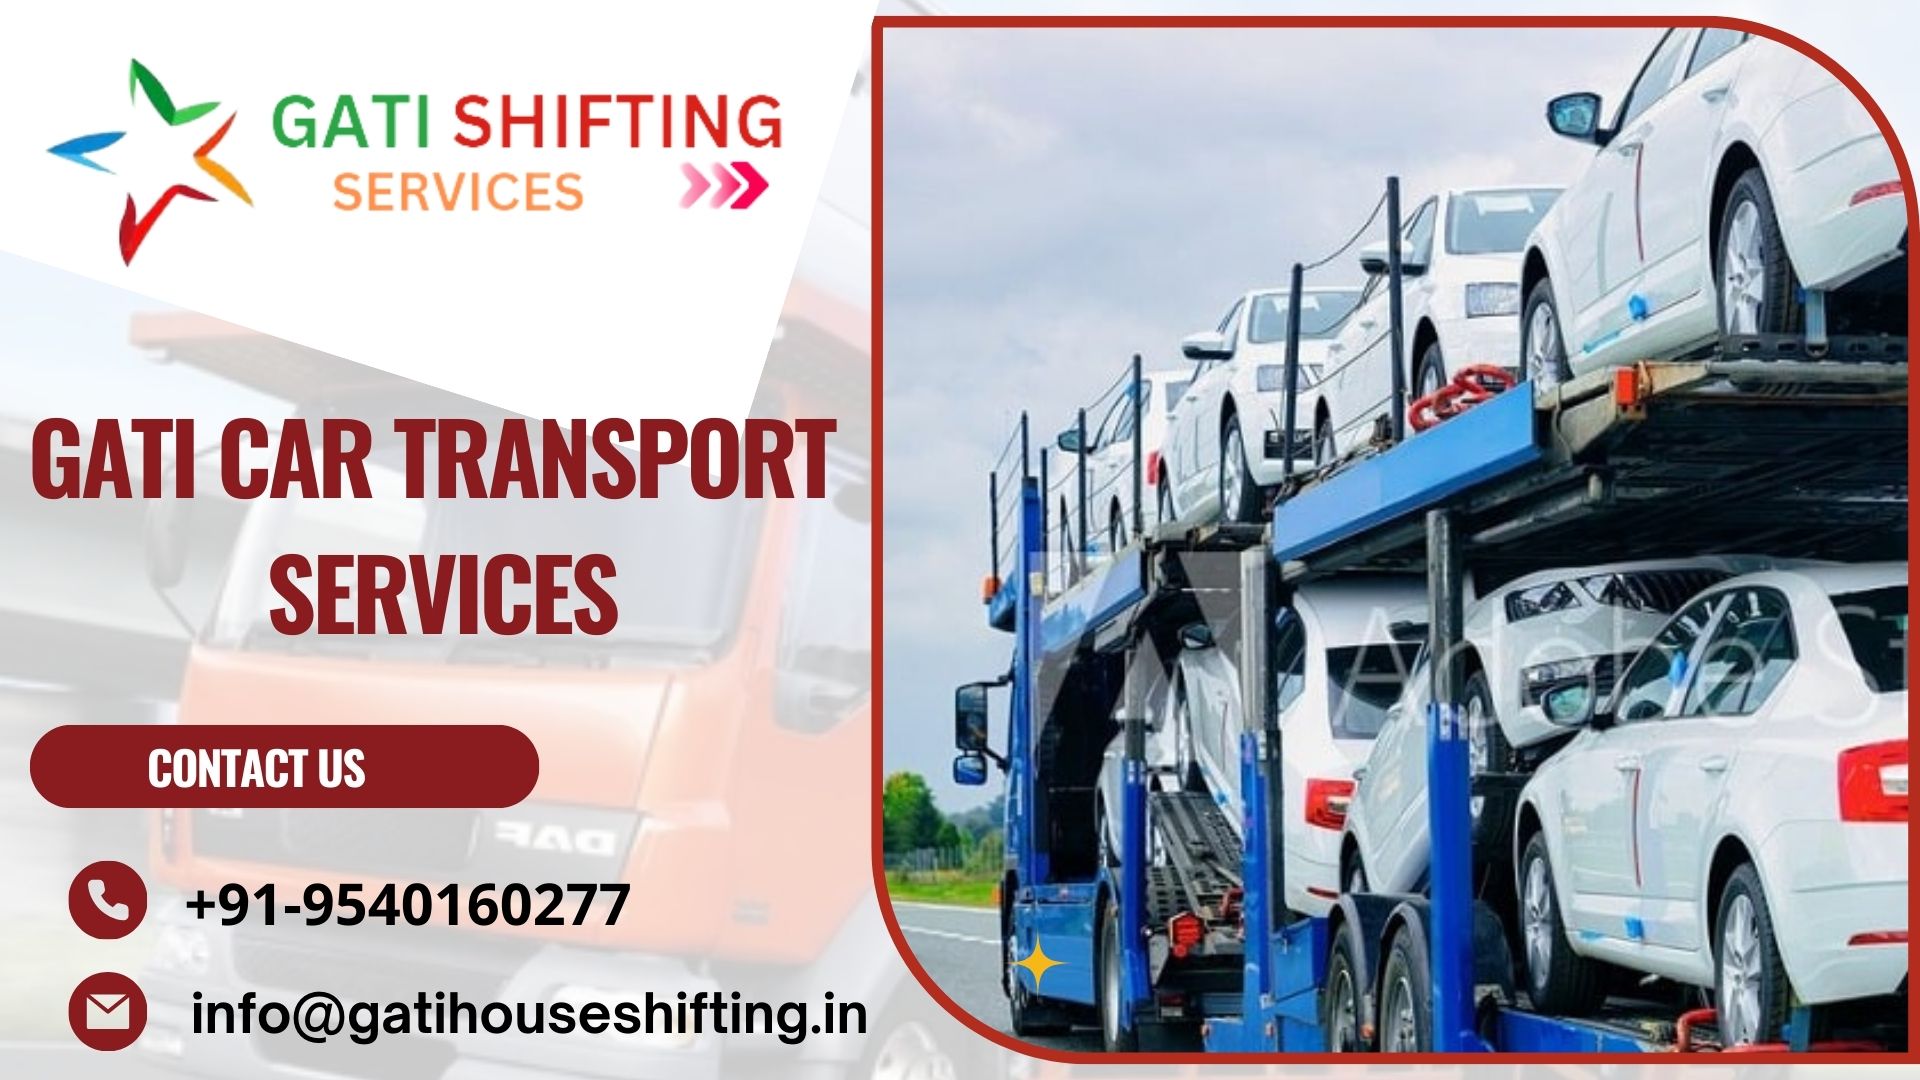 Car transport services from Delhi to Kochi